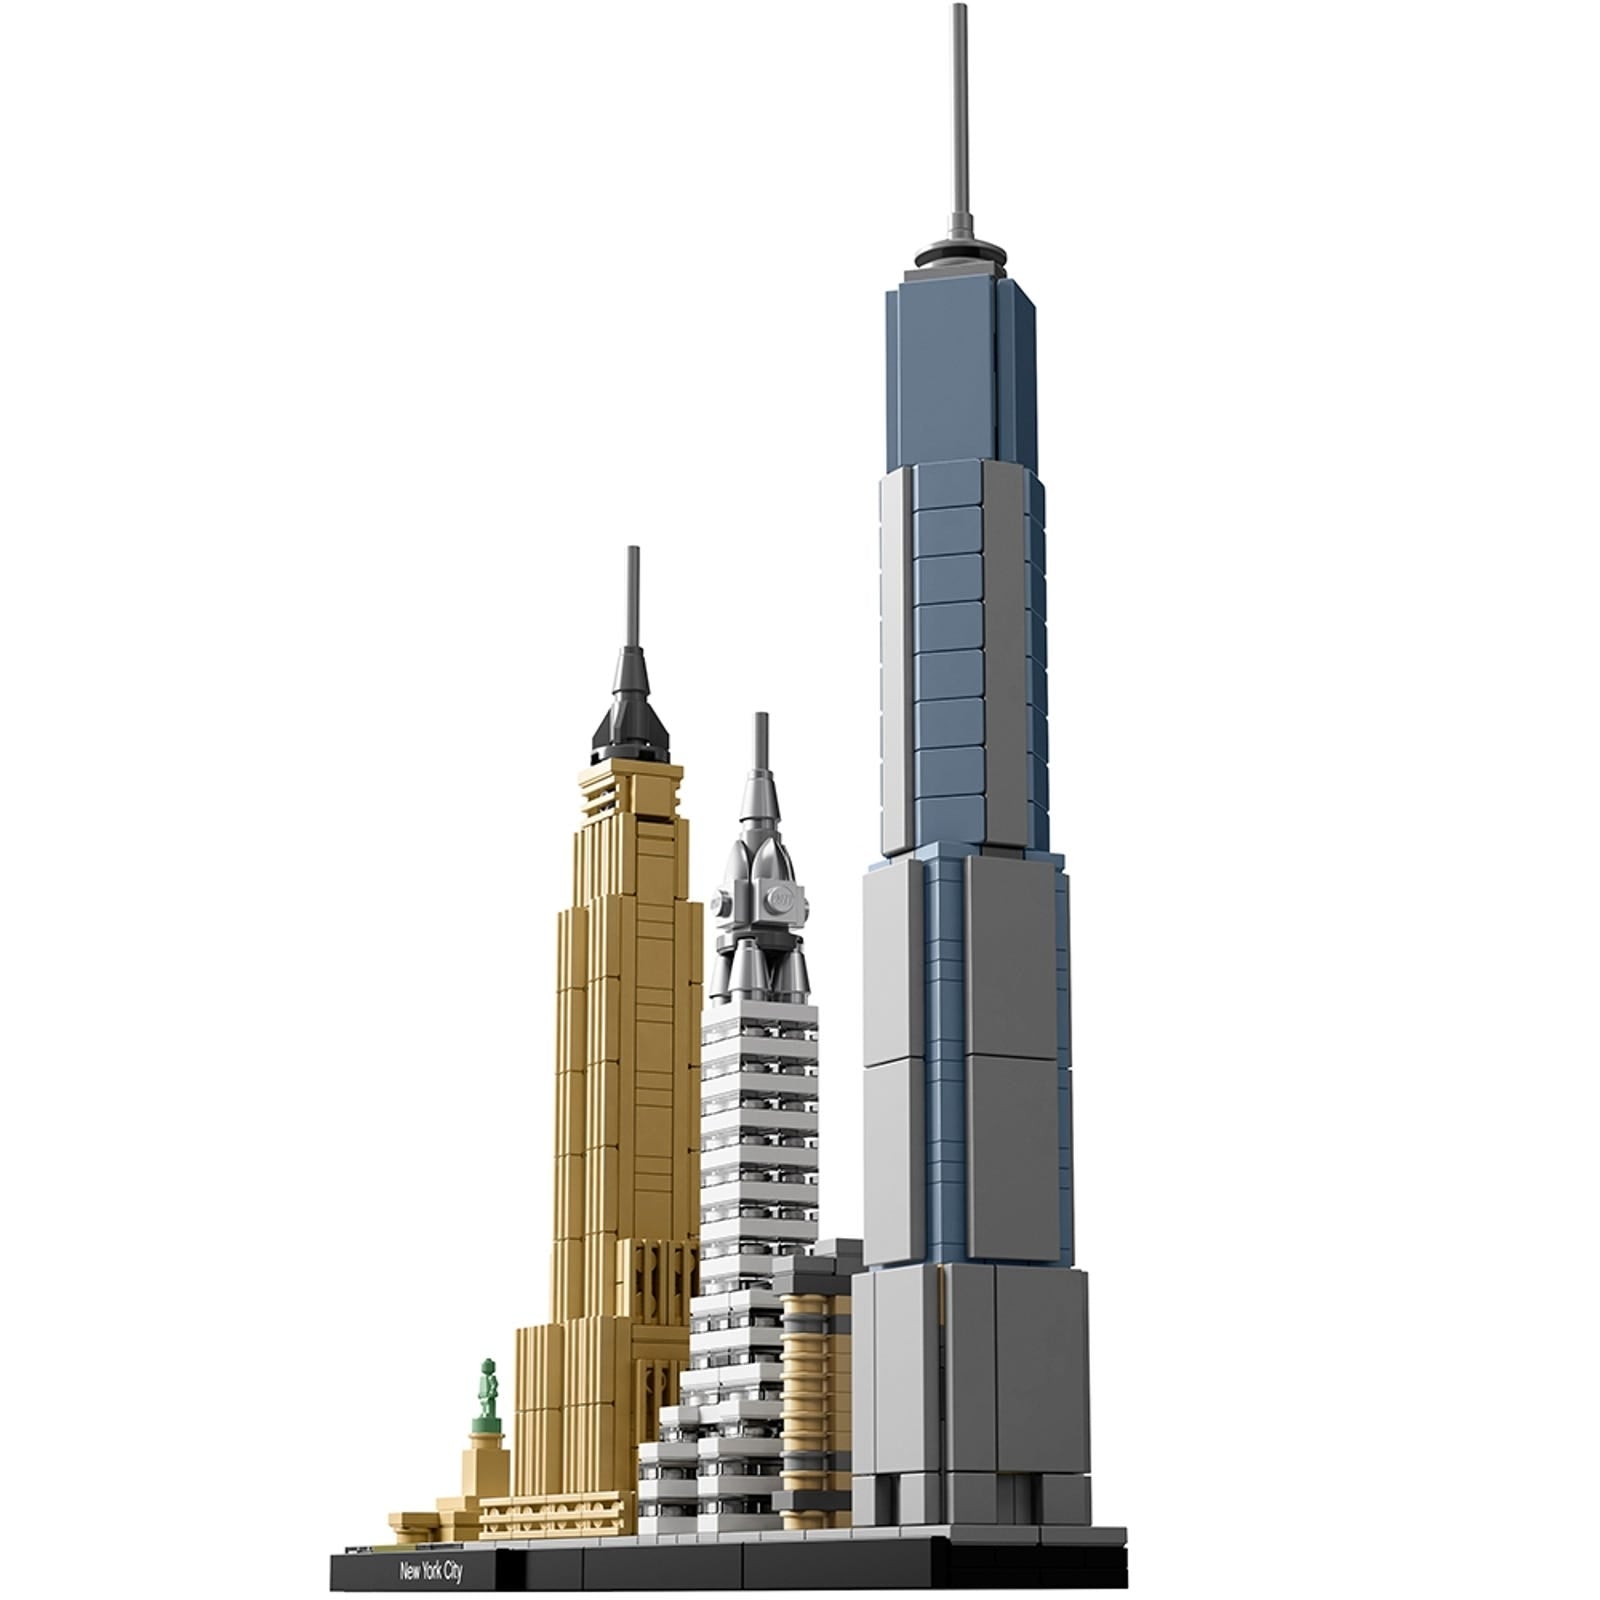 Lego Architecture New York City 21028 - Albagame